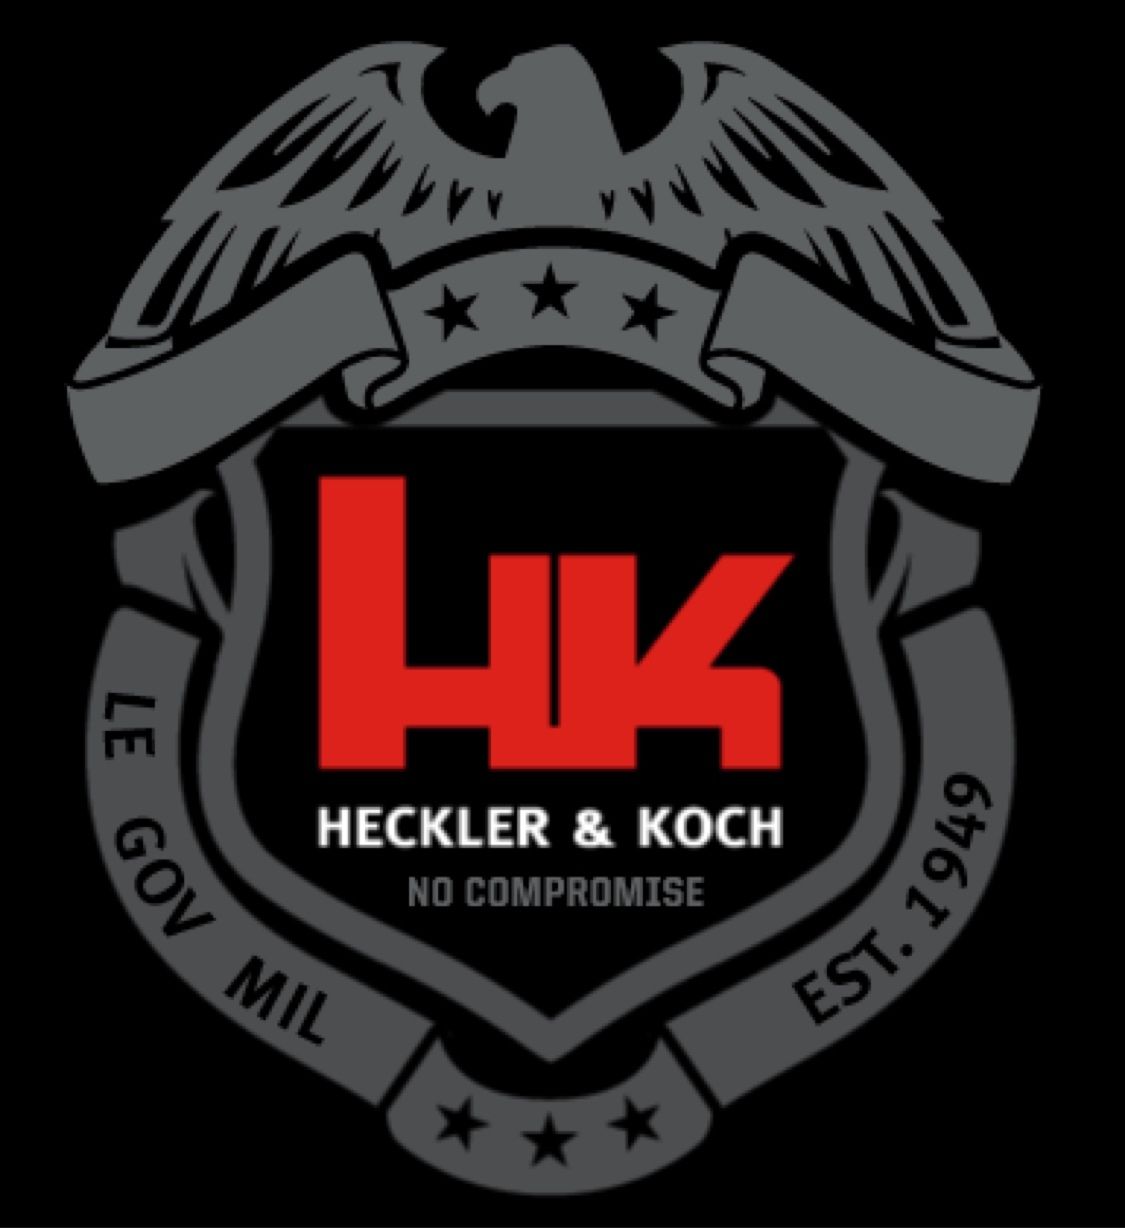 Heckler & Koch Law Enforcement